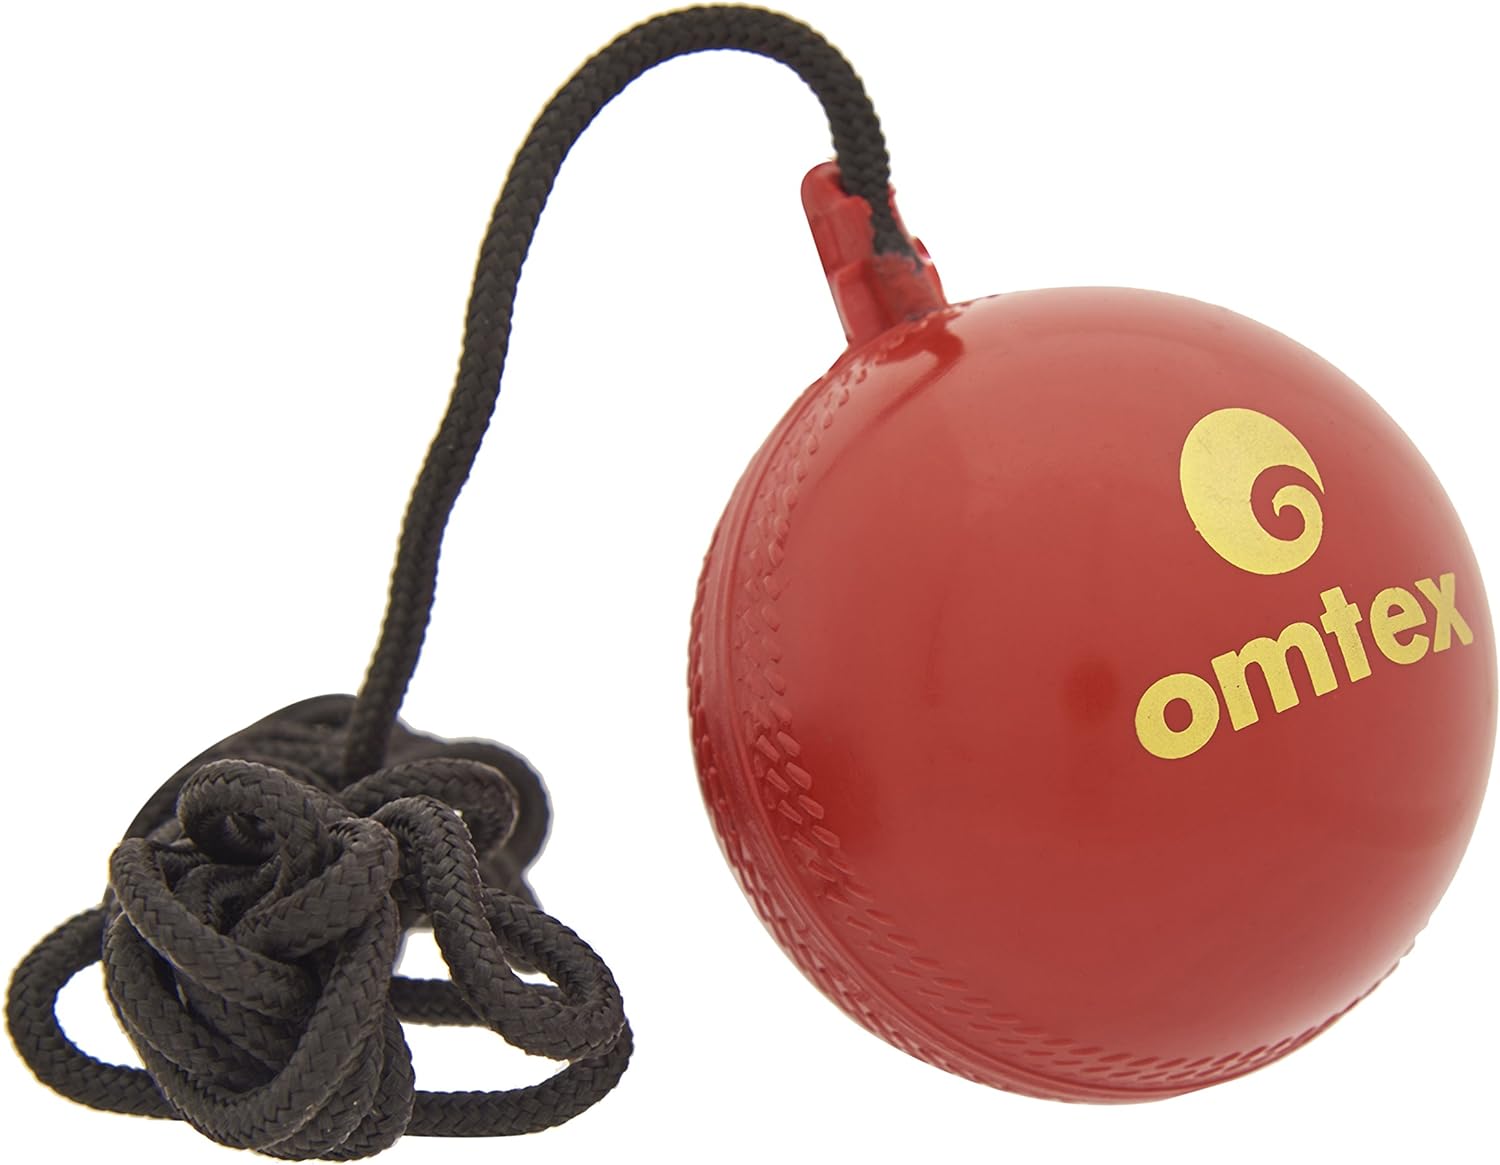 Omtex Men's Cricket Ball